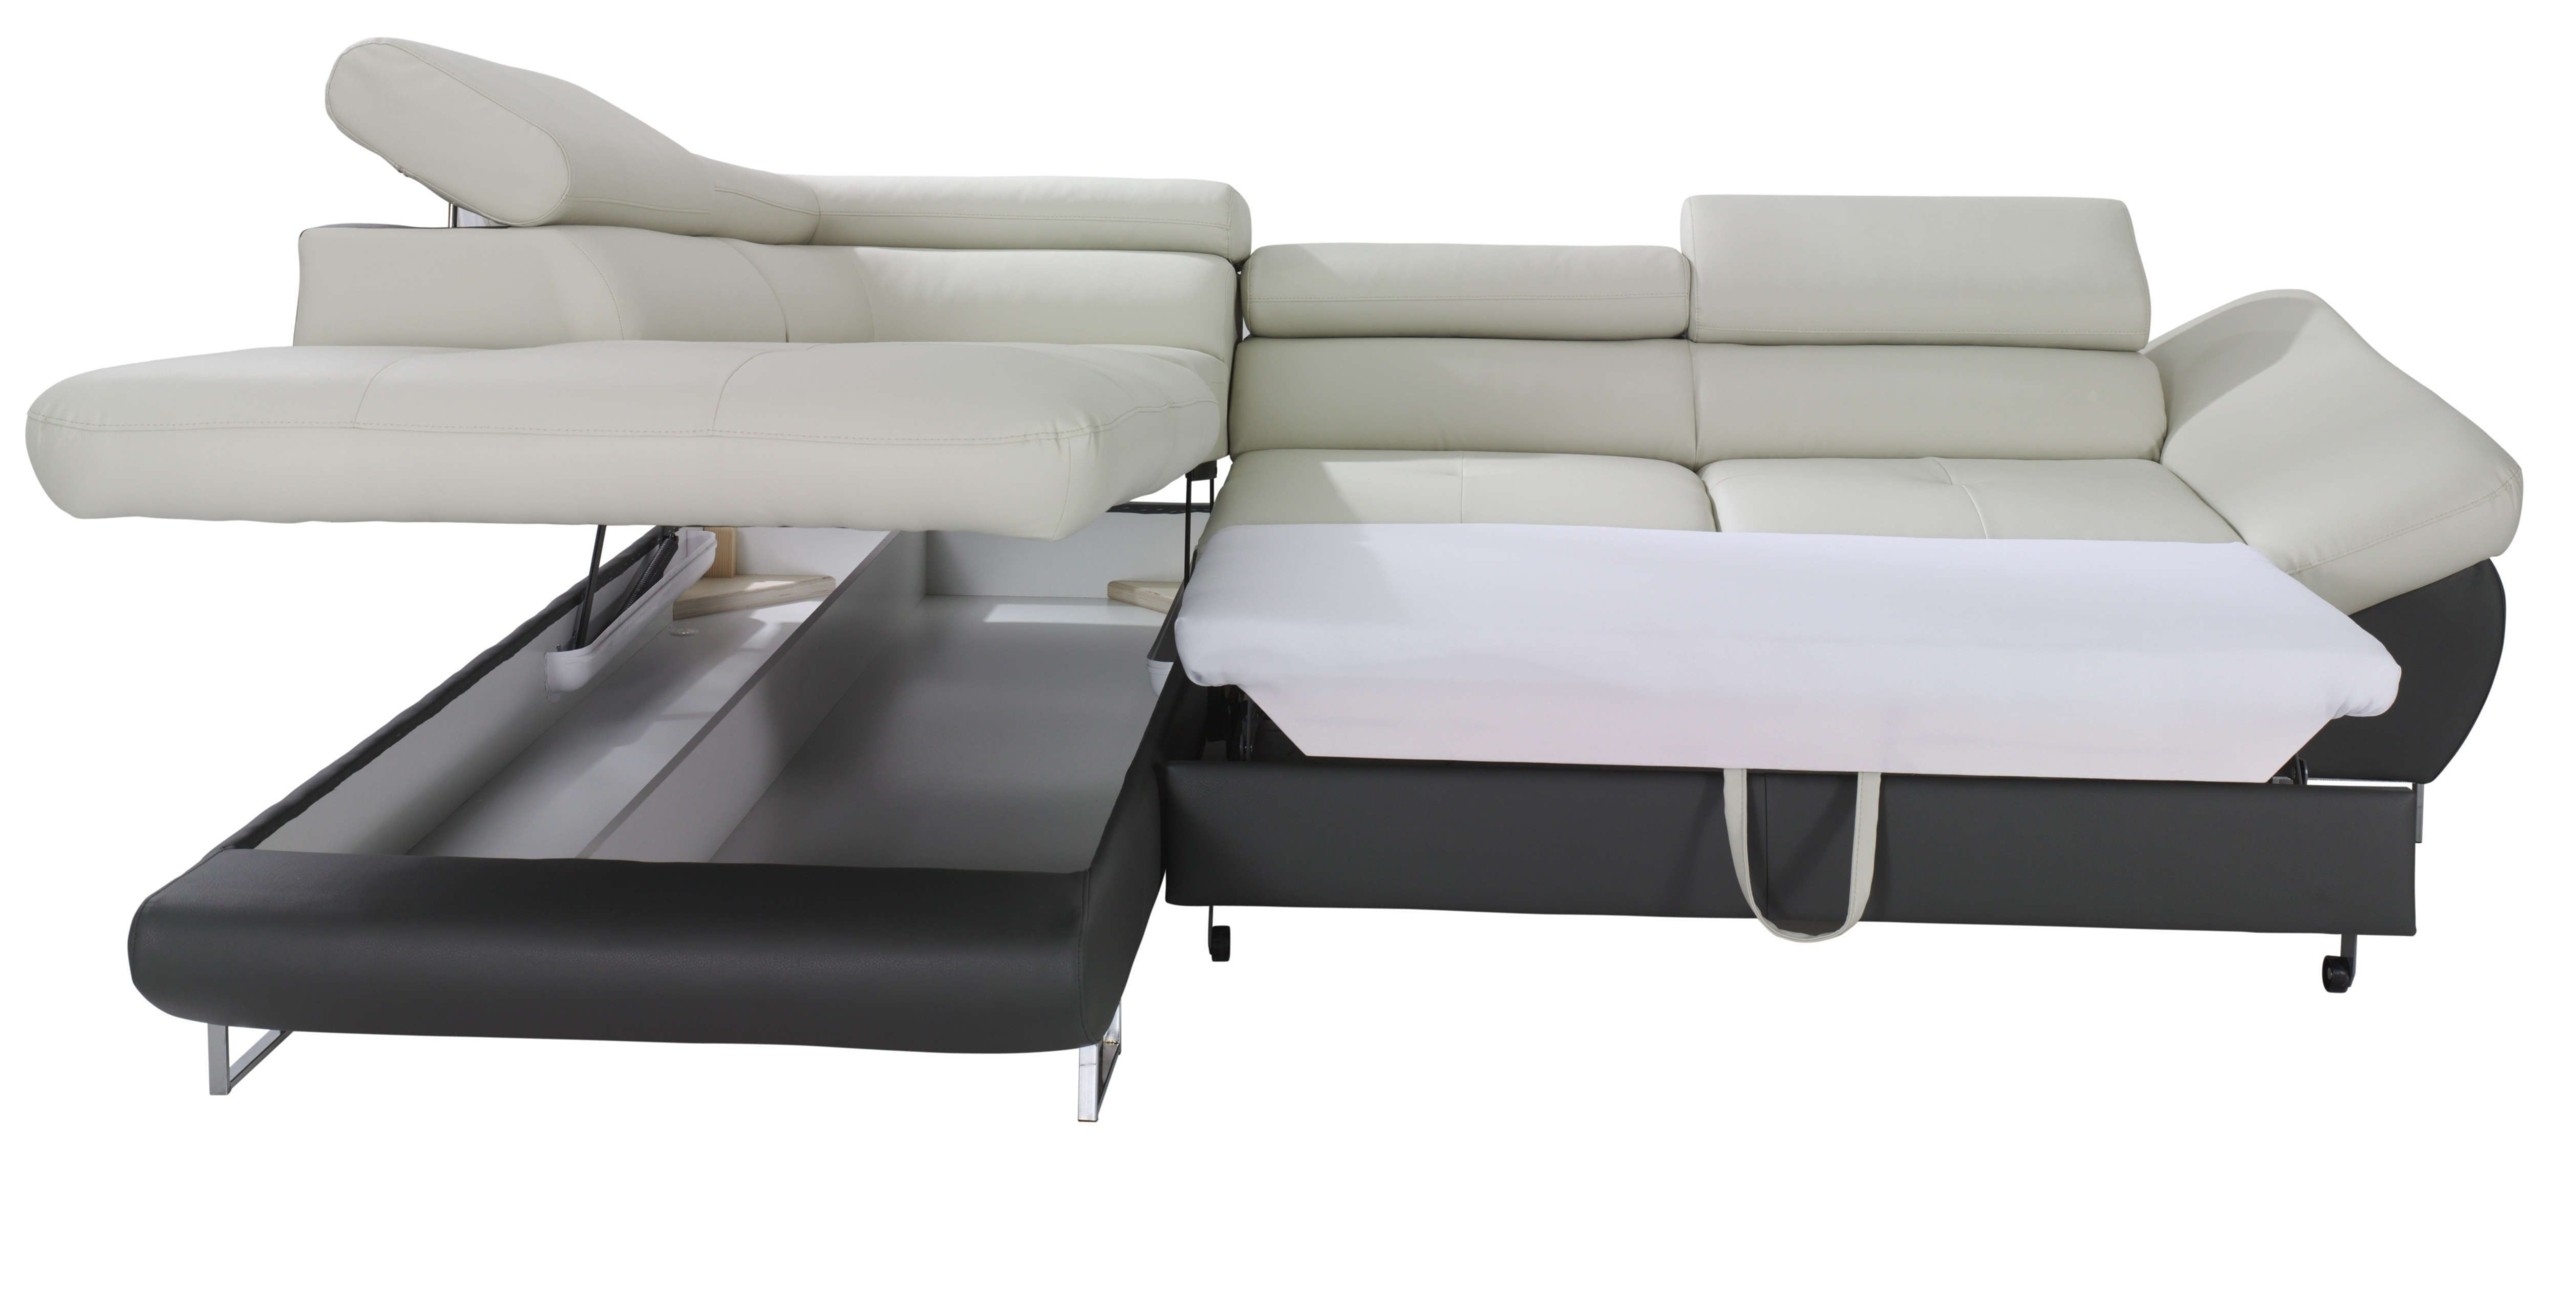 Wonderful sectional sleeper sofa for your furniture fabio sectional sleeper